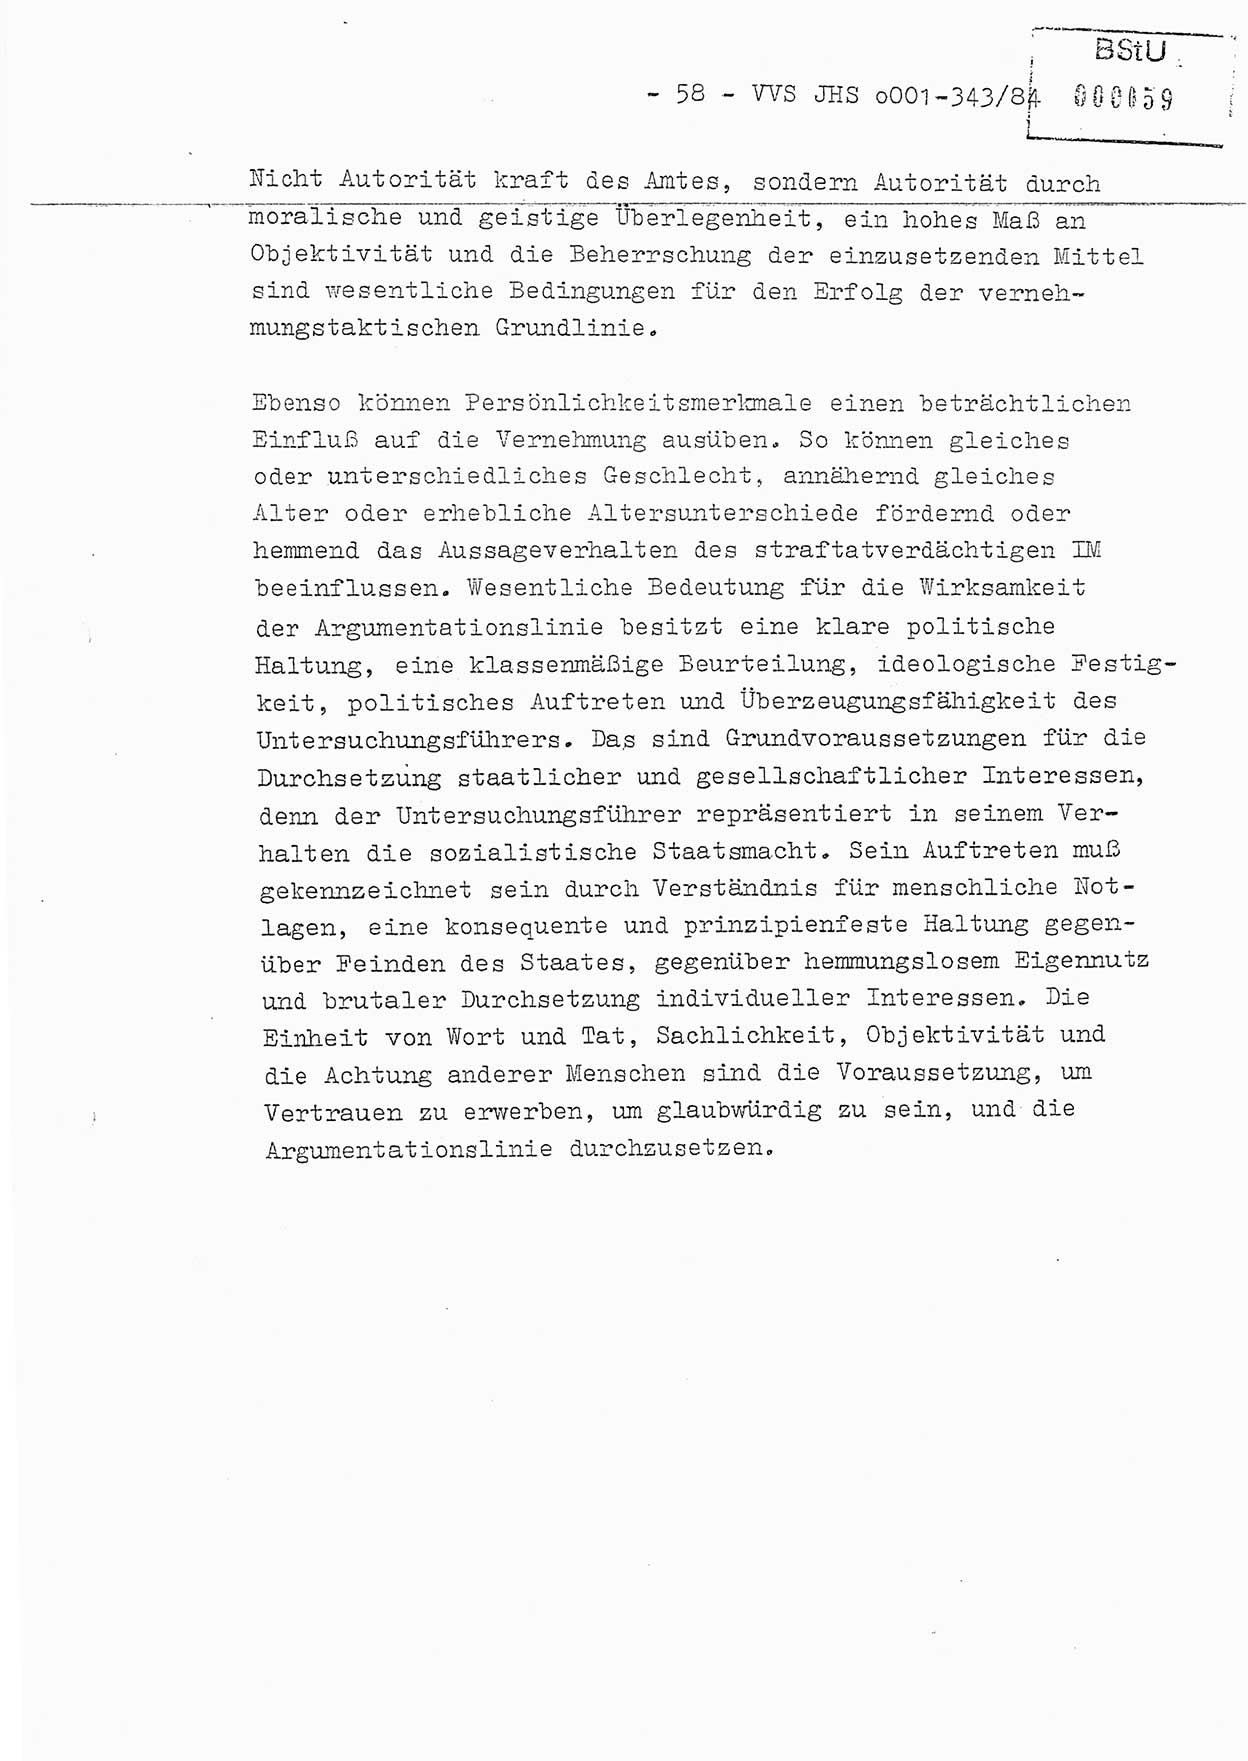 Diplomarbeit, Oberleutnant Bernd Michael (HA Ⅸ/5), Oberleutnant Peter Felber (HA IX/5), Ministerium für Staatssicherheit (MfS) [Deutsche Demokratische Republik (DDR)], Juristische Hochschule (JHS), Vertrauliche Verschlußsache (VVS) o001-343/84, Potsdam 1985, Seite 58 (Dipl.-Arb. MfS DDR JHS VVS o001-343/84 1985, S. 58)